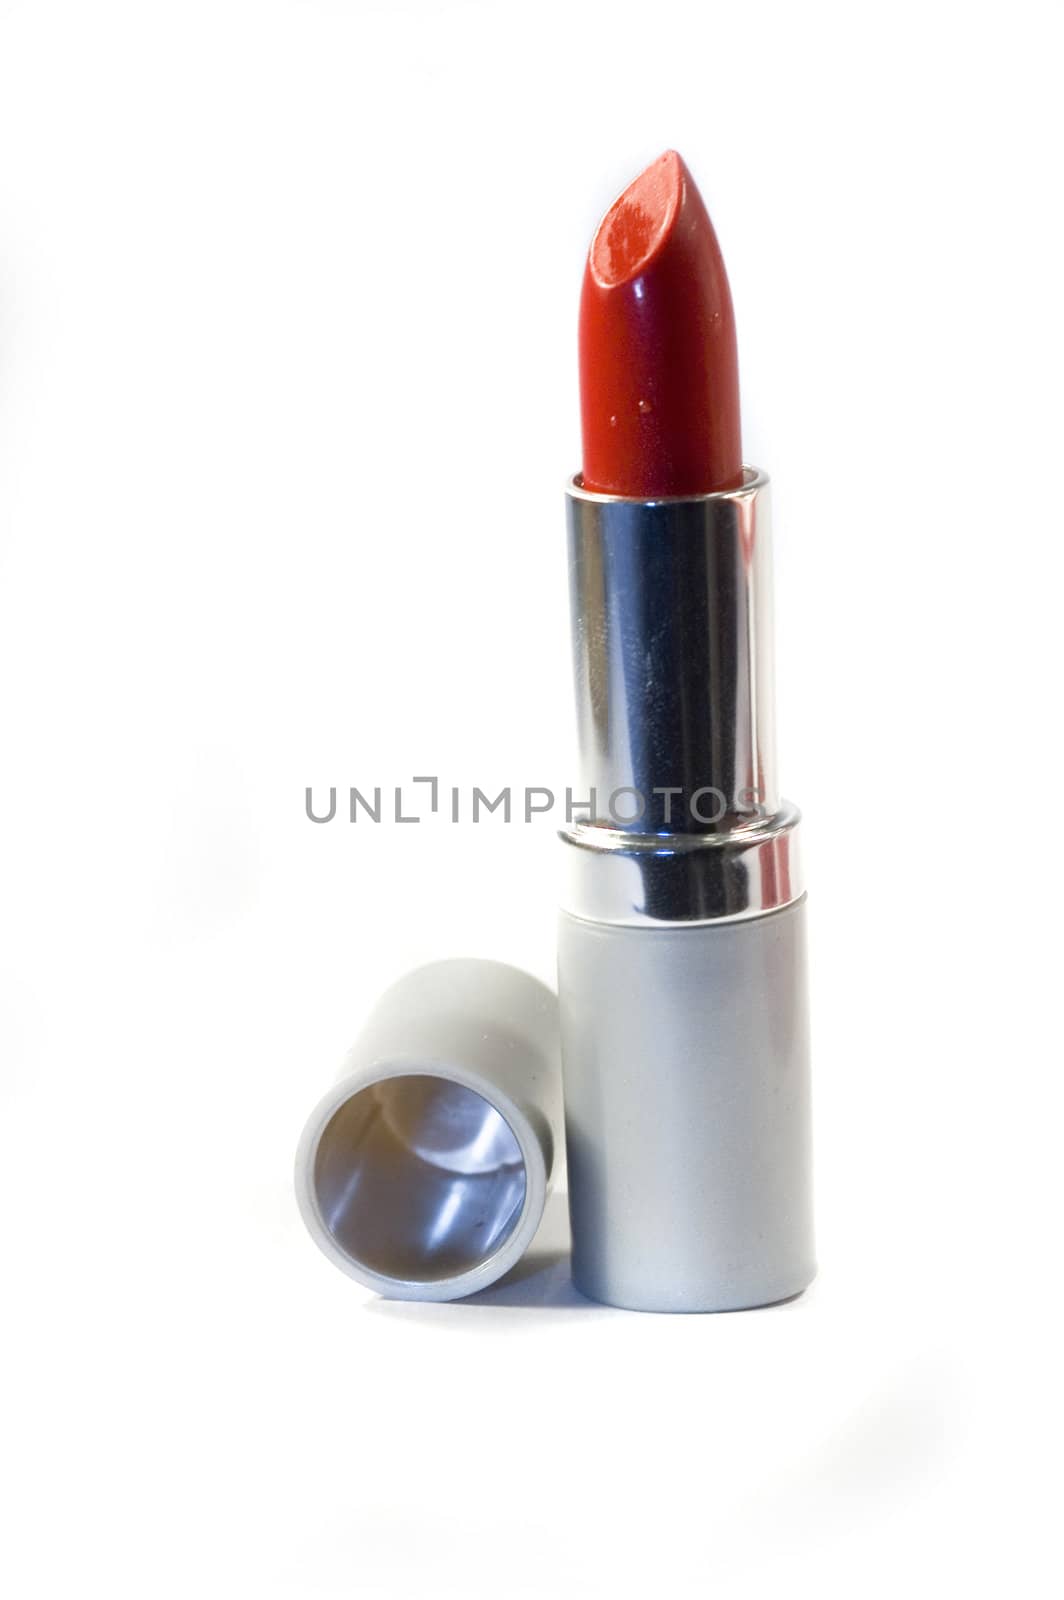 lipstick by Lukrecja